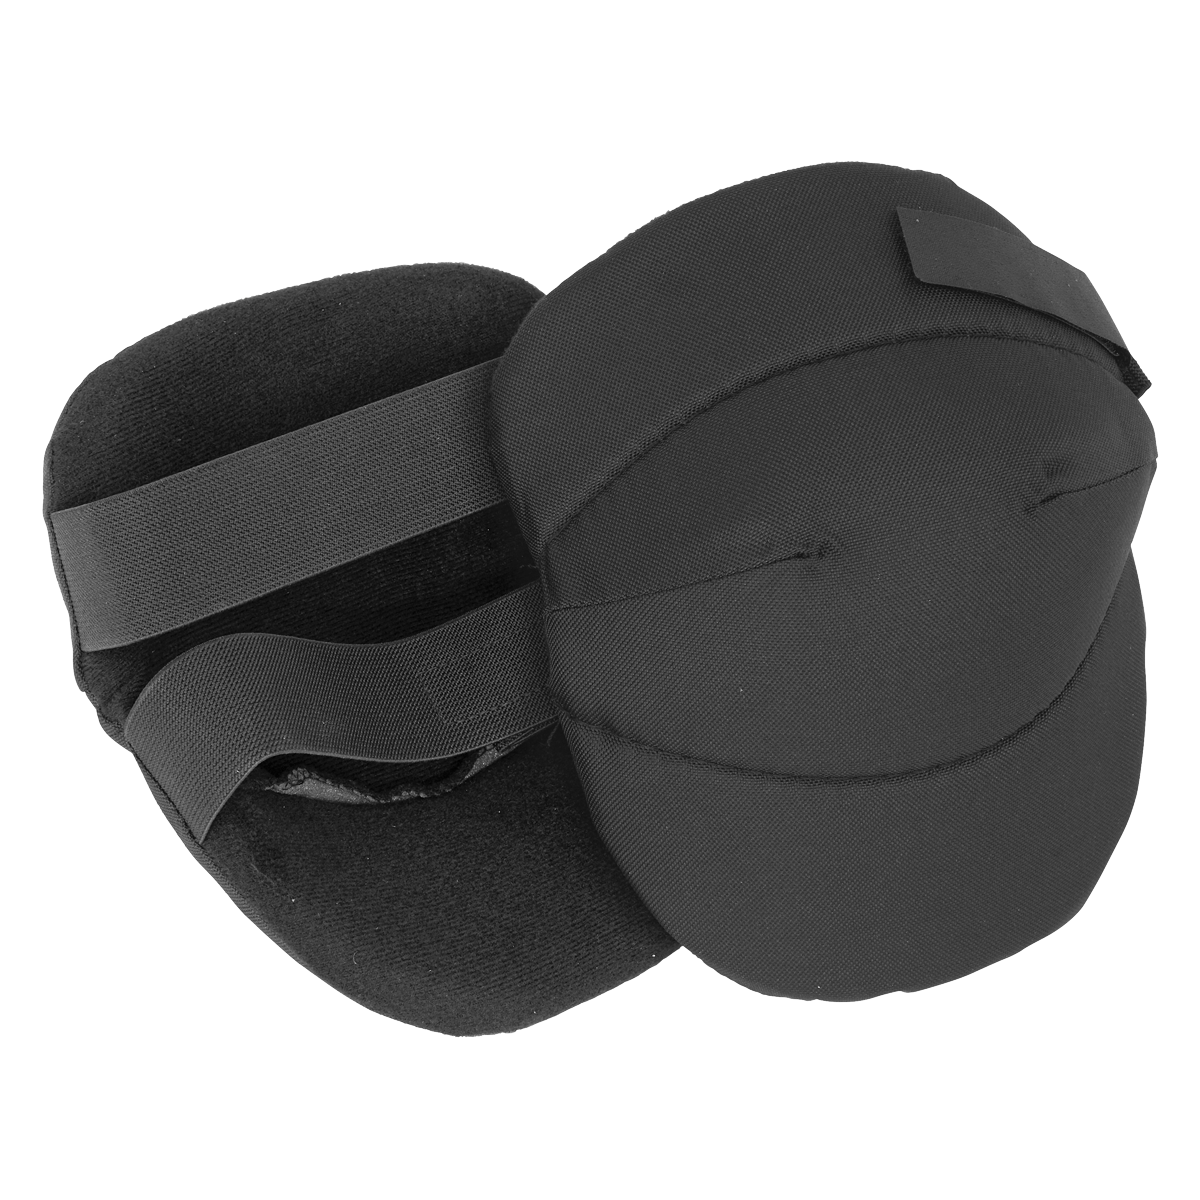 Sealey Comfort Knee Pads - Pair 9706